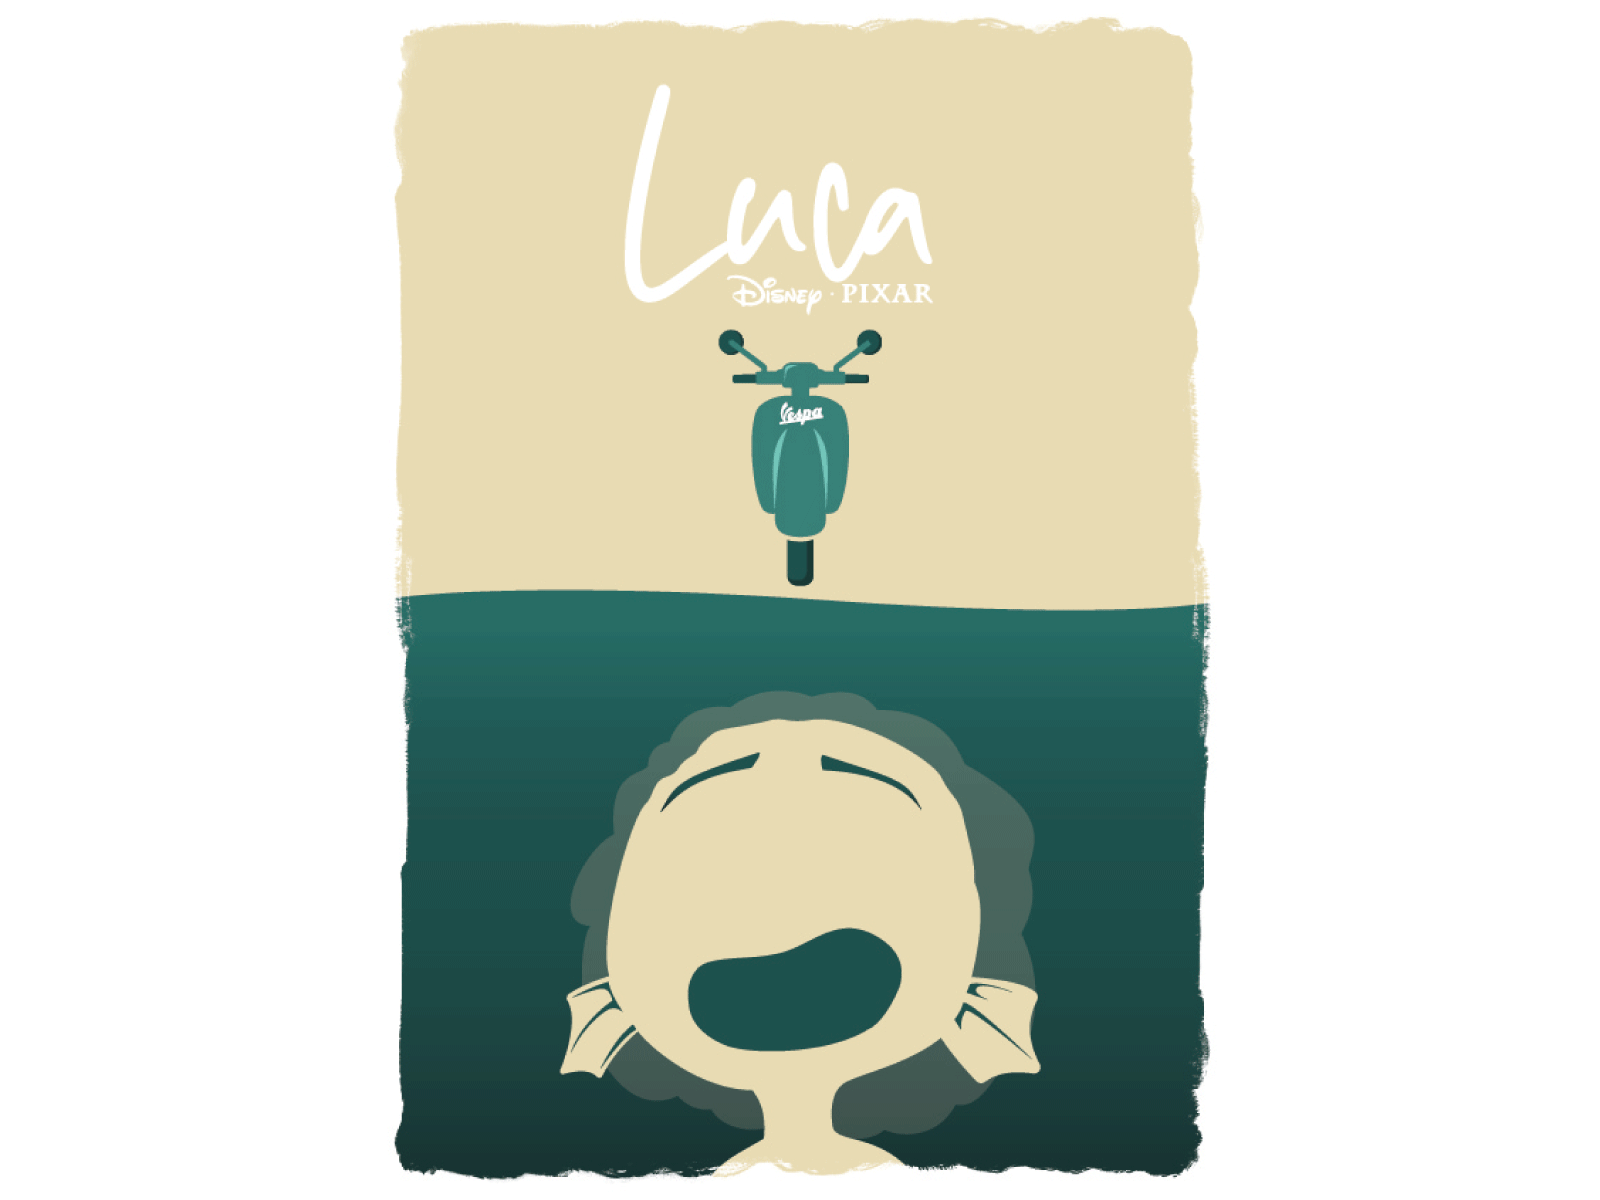 'Luca' Alternative Movie Poster